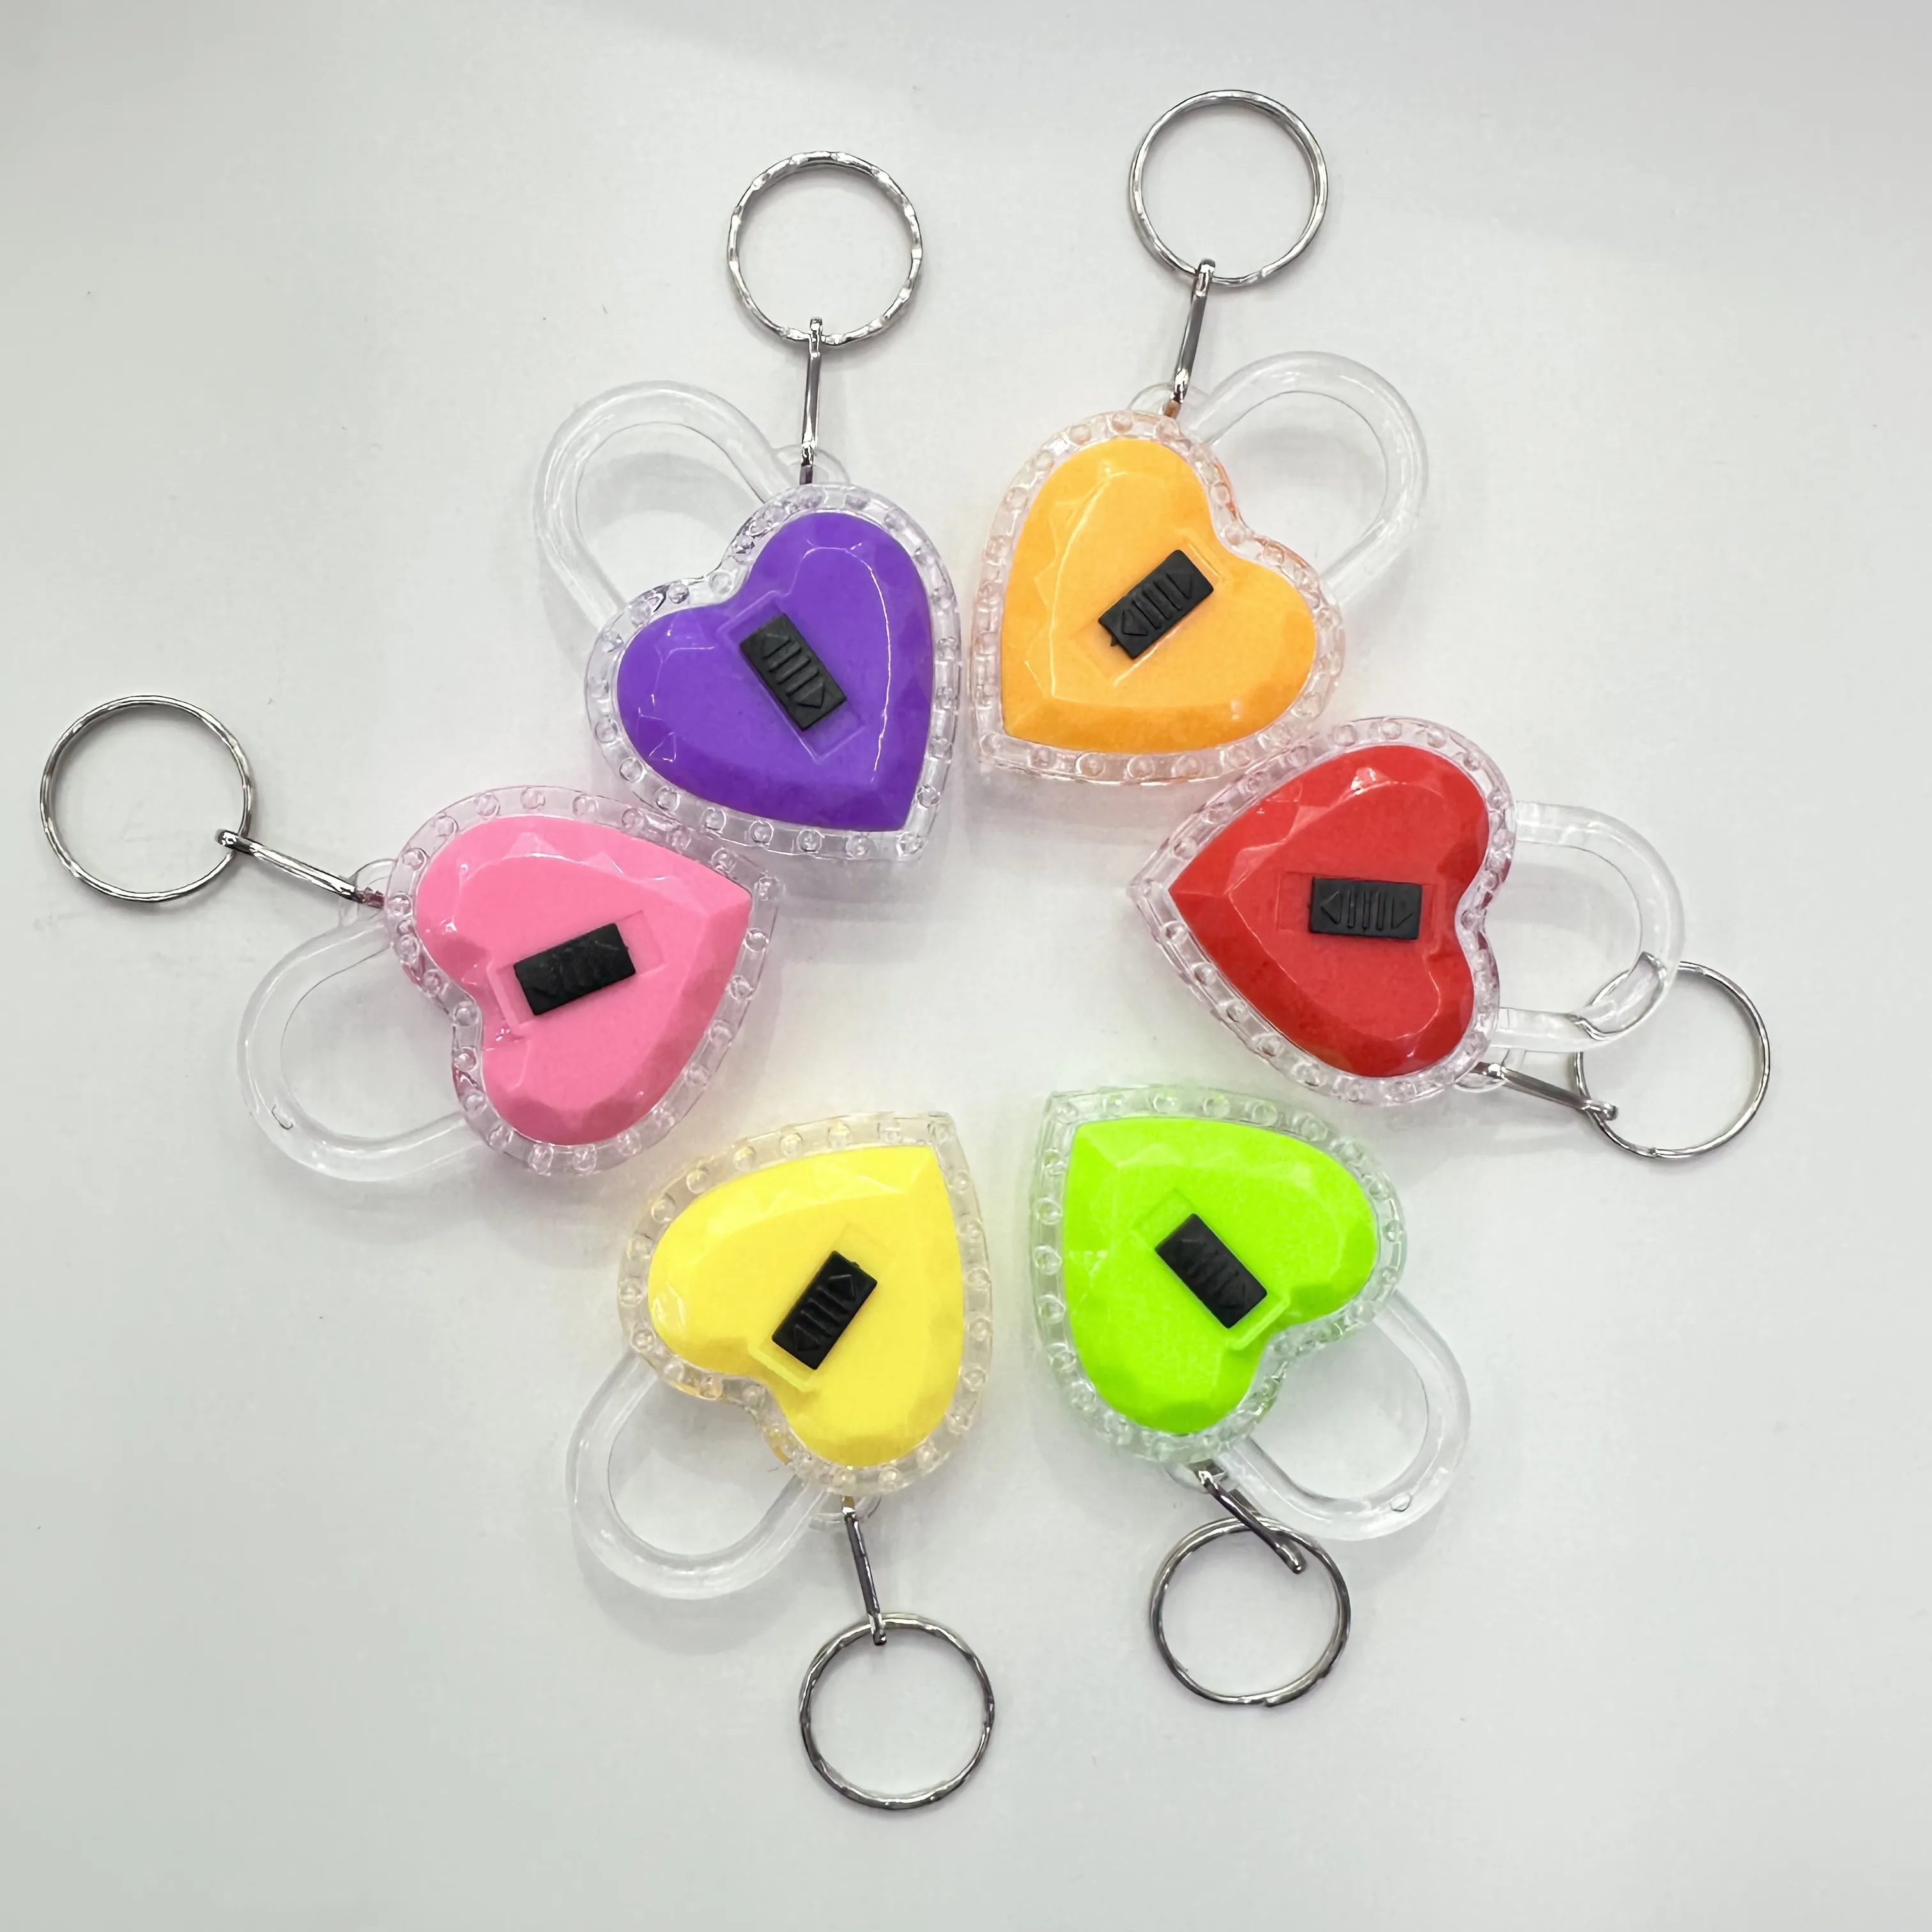 Wholesale Popular Multi-Function Cheap Toy Led Keychain Heart Shape Lock Emergency Lighting Led Keychains